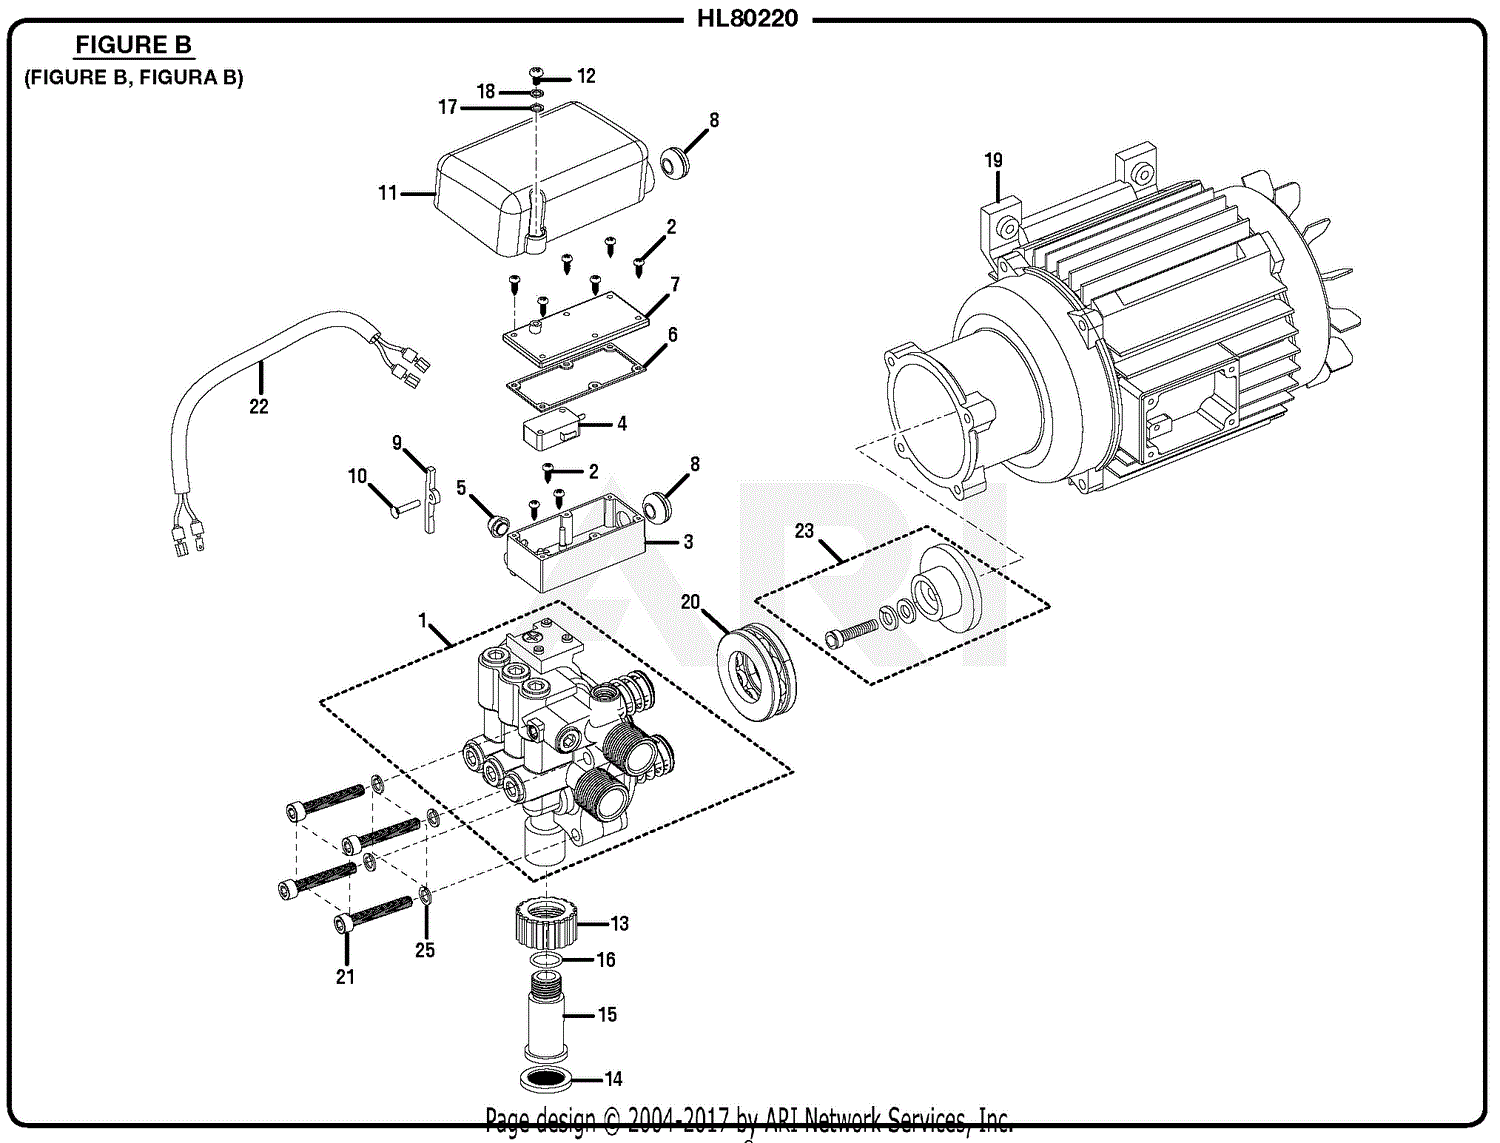 Homelite Hl80220 Electric Pressure Washer Parts Diagram